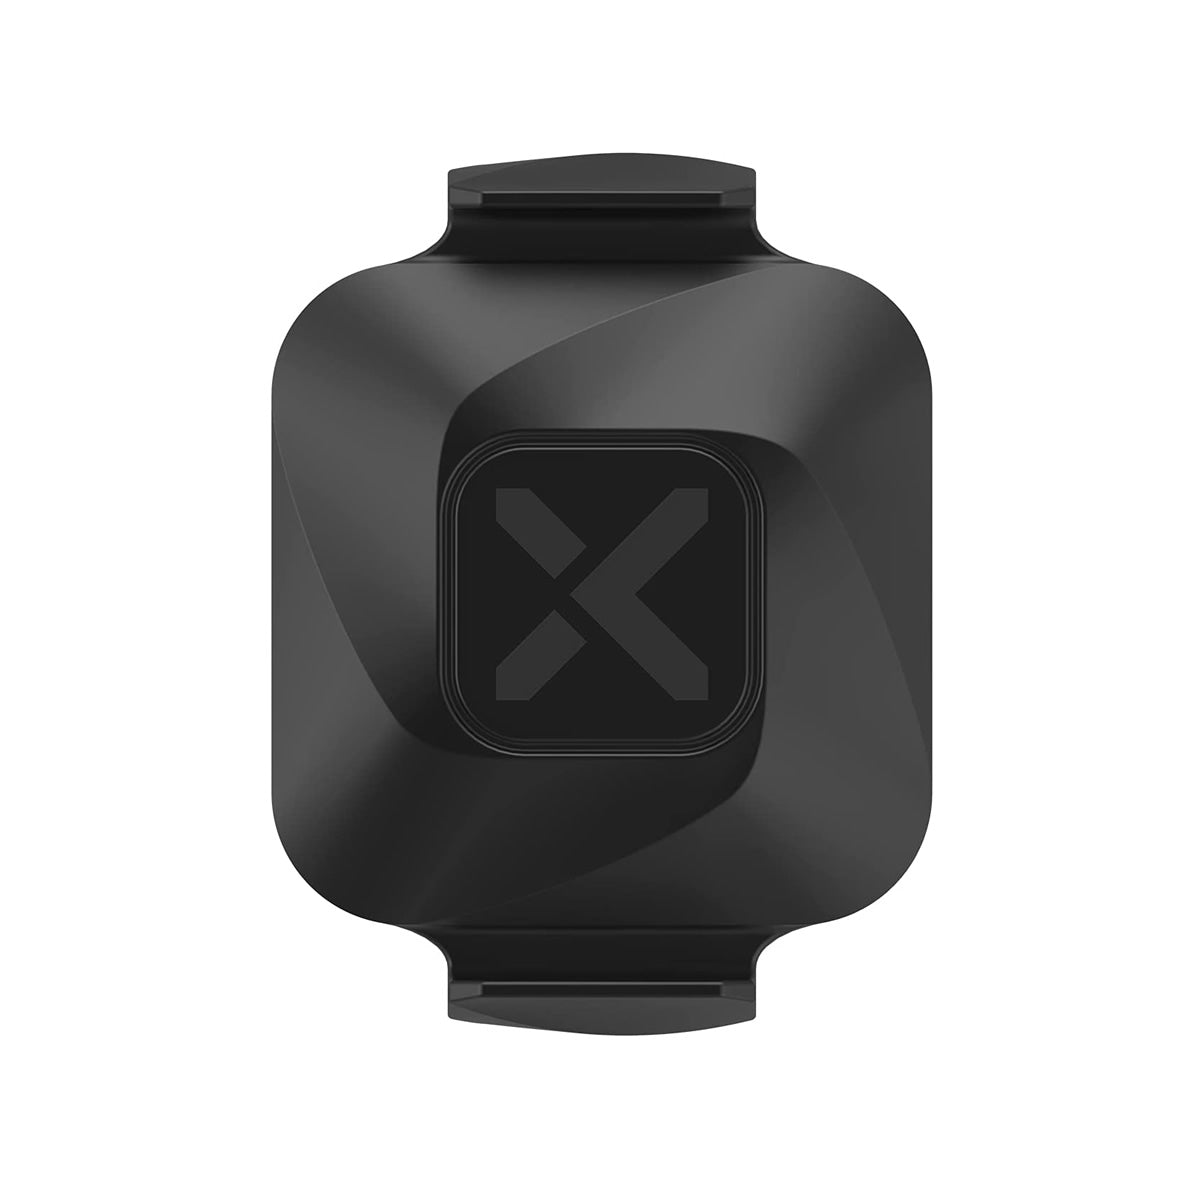 XOSS "Vortex" Bike Cadence and Speed Sensor Wireless IPX7 Waterproof ANT+/Bluetooth 4.0 - XOSS.CO